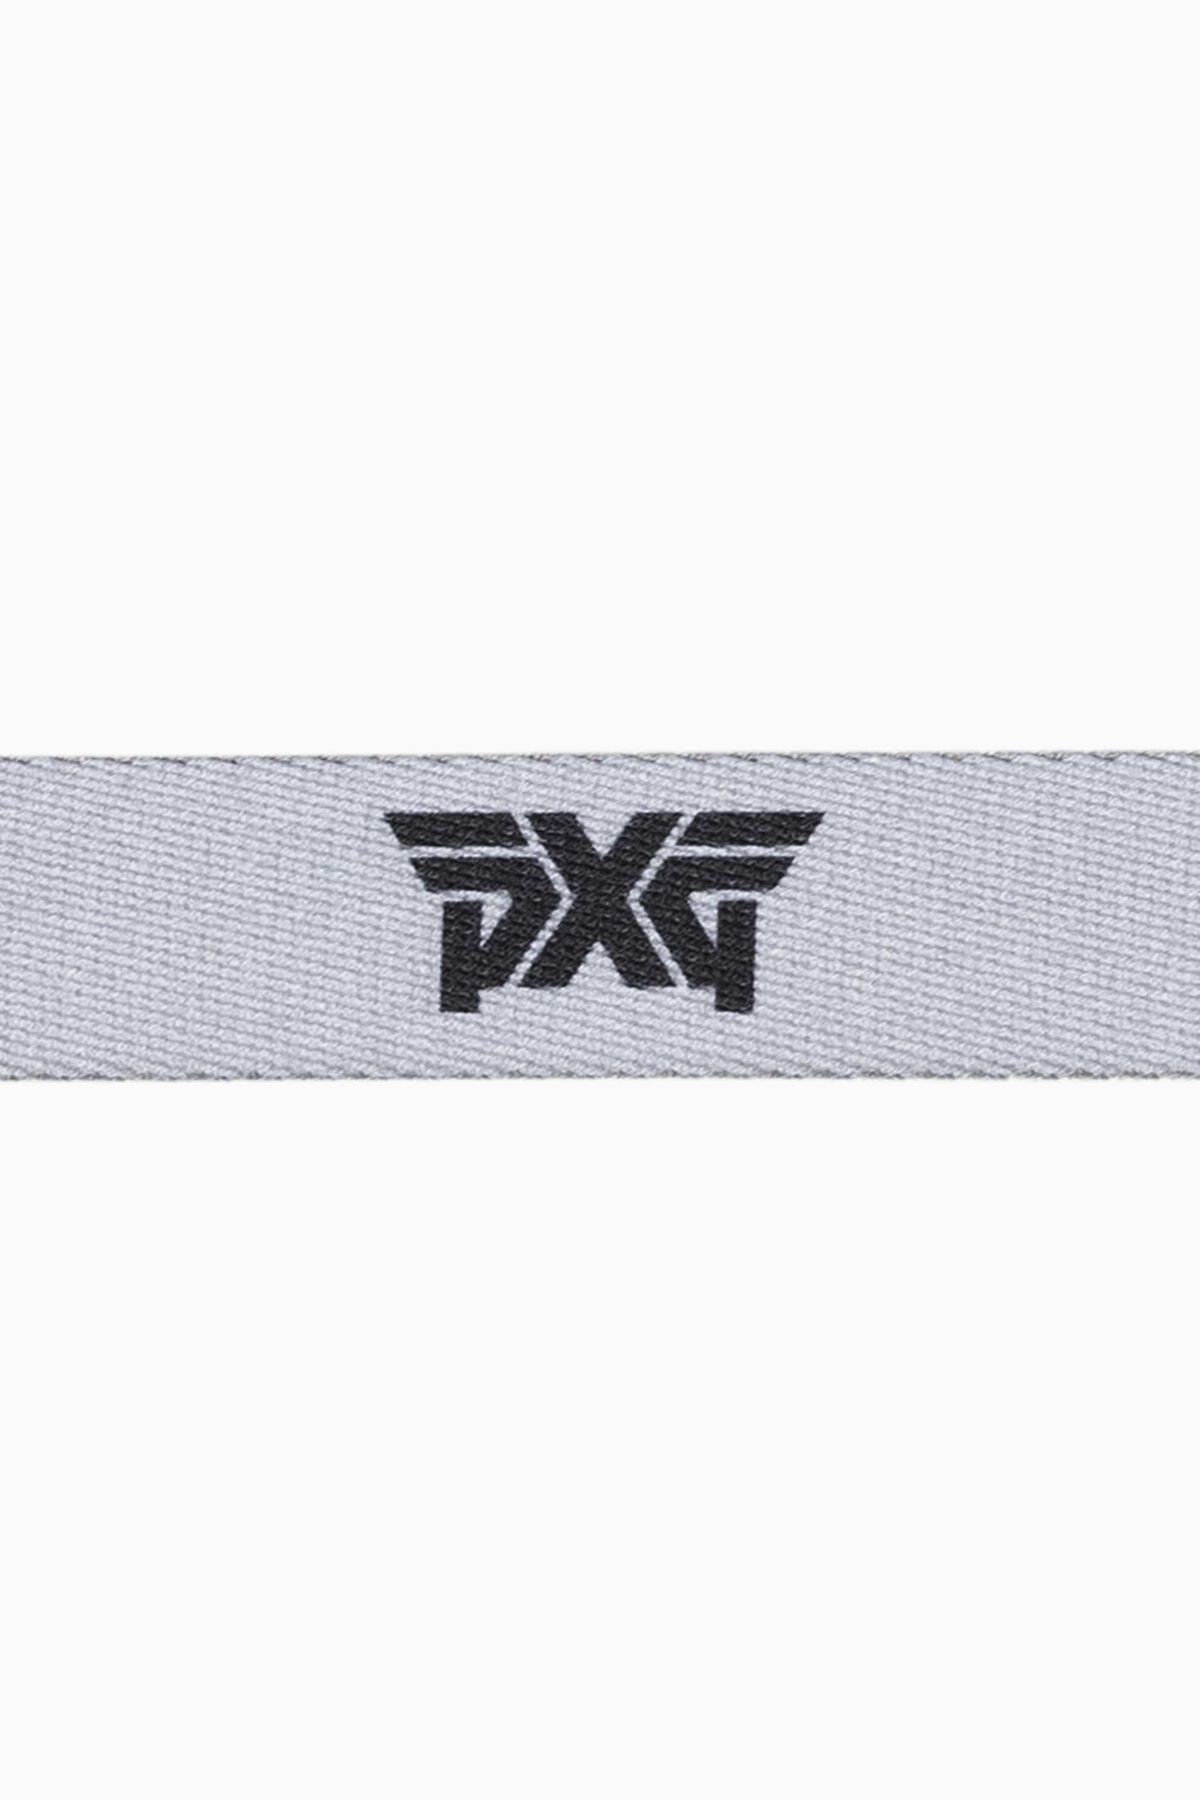 Solid PXG Belt Gray